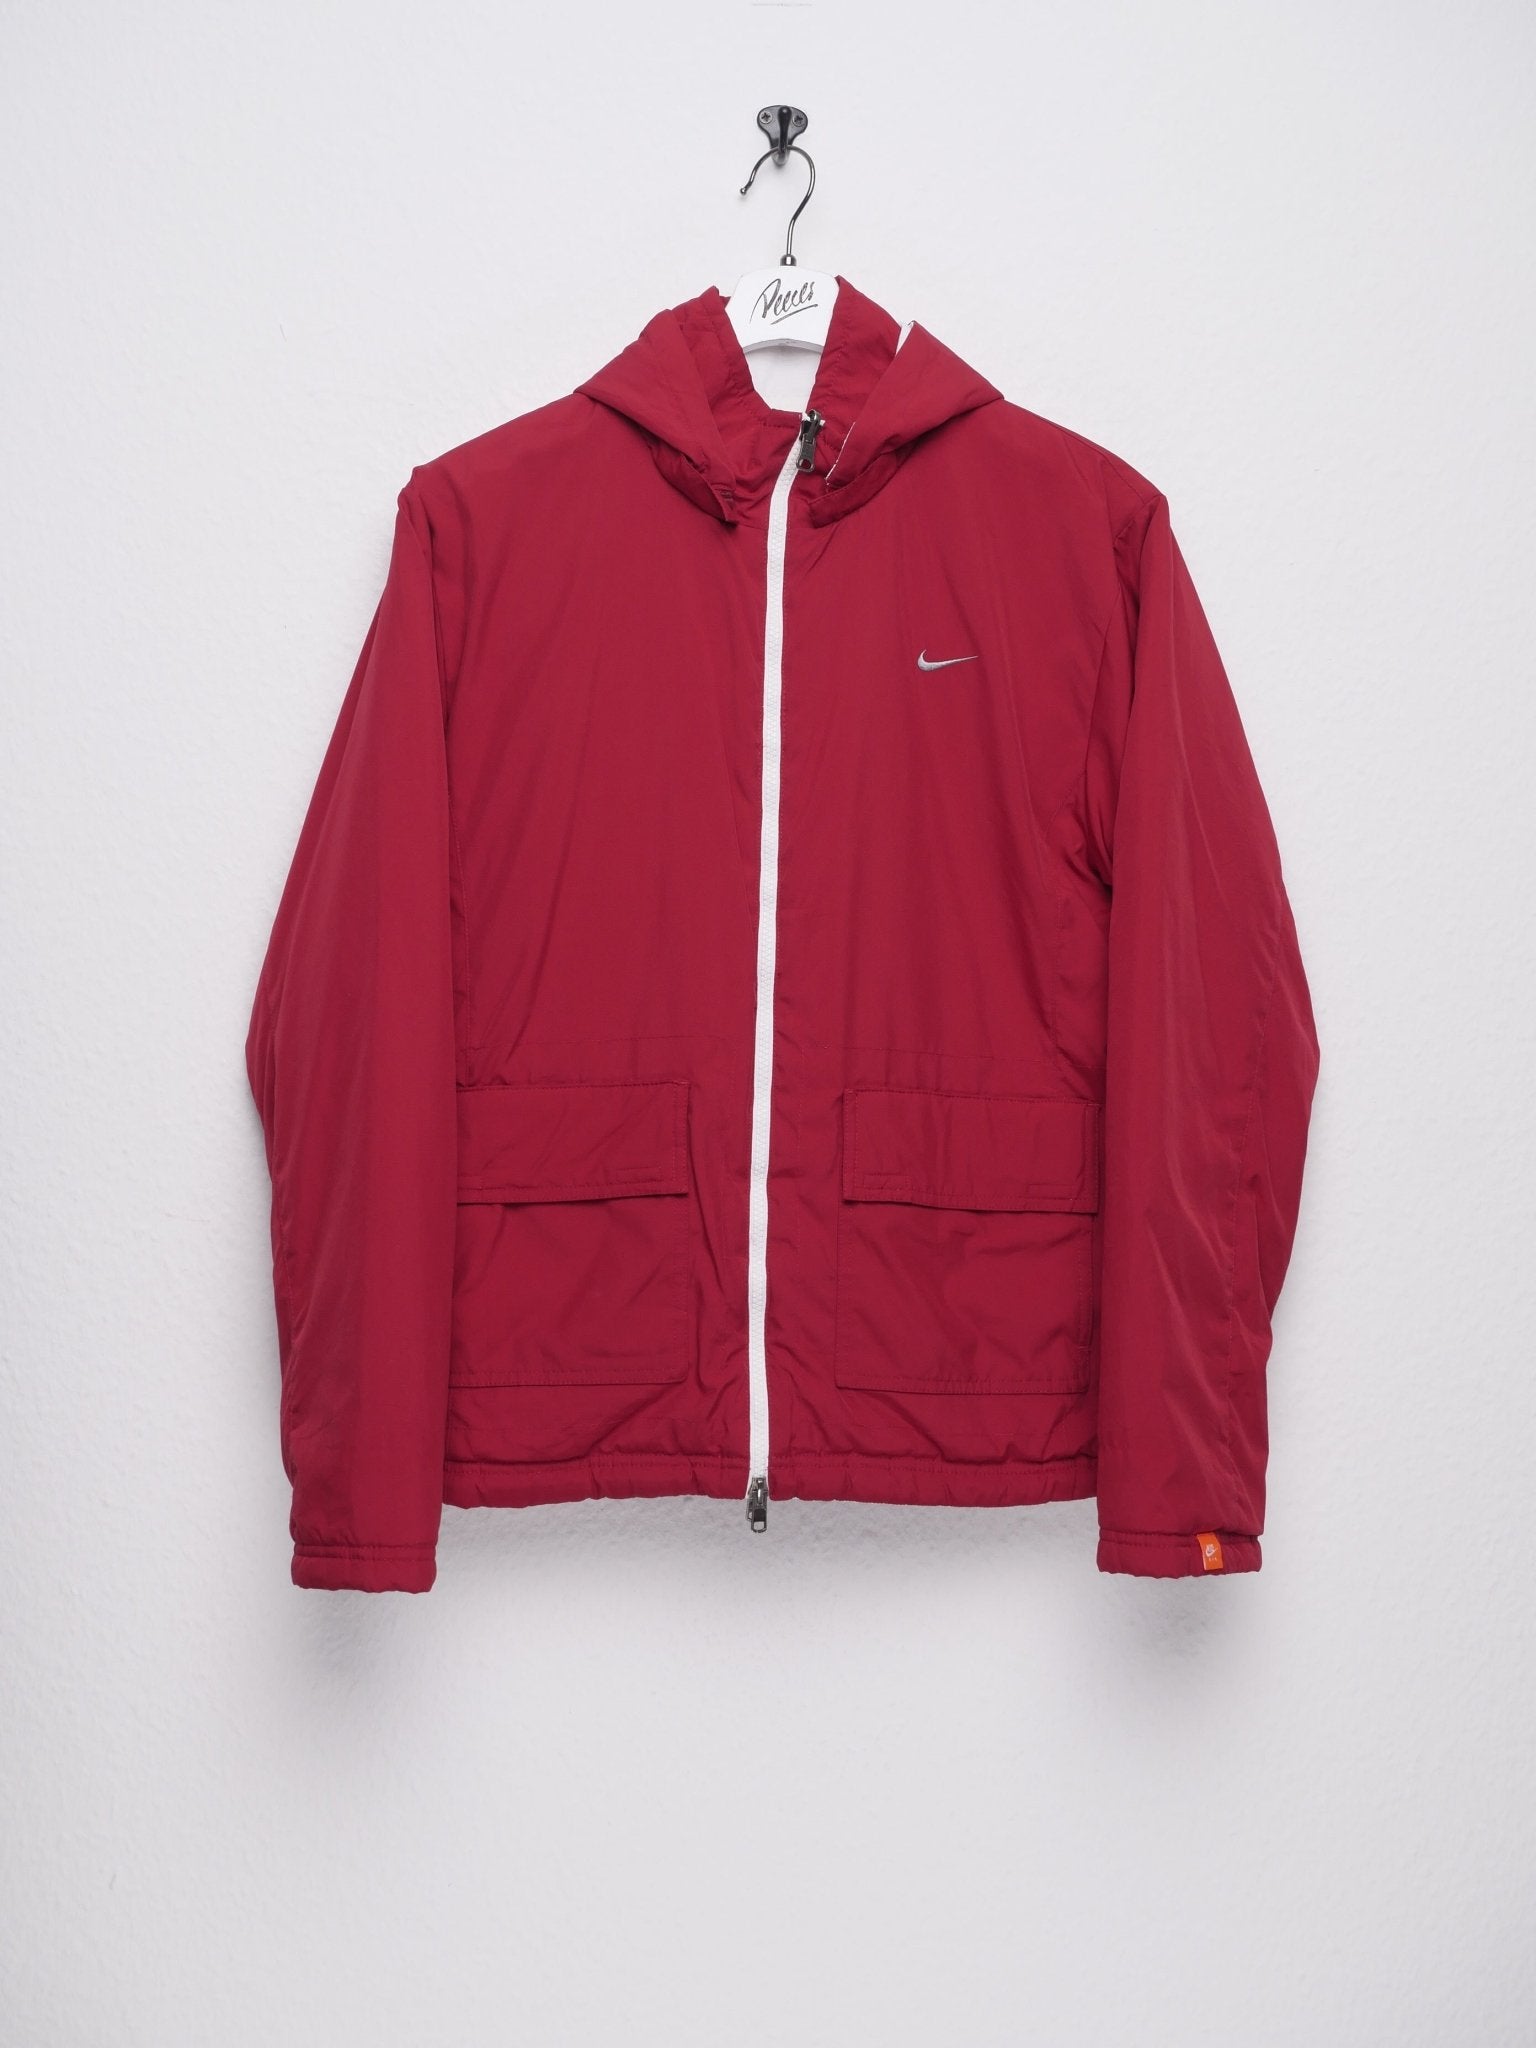 Nike embroidered Swoosh basic red Jacke - Peeces